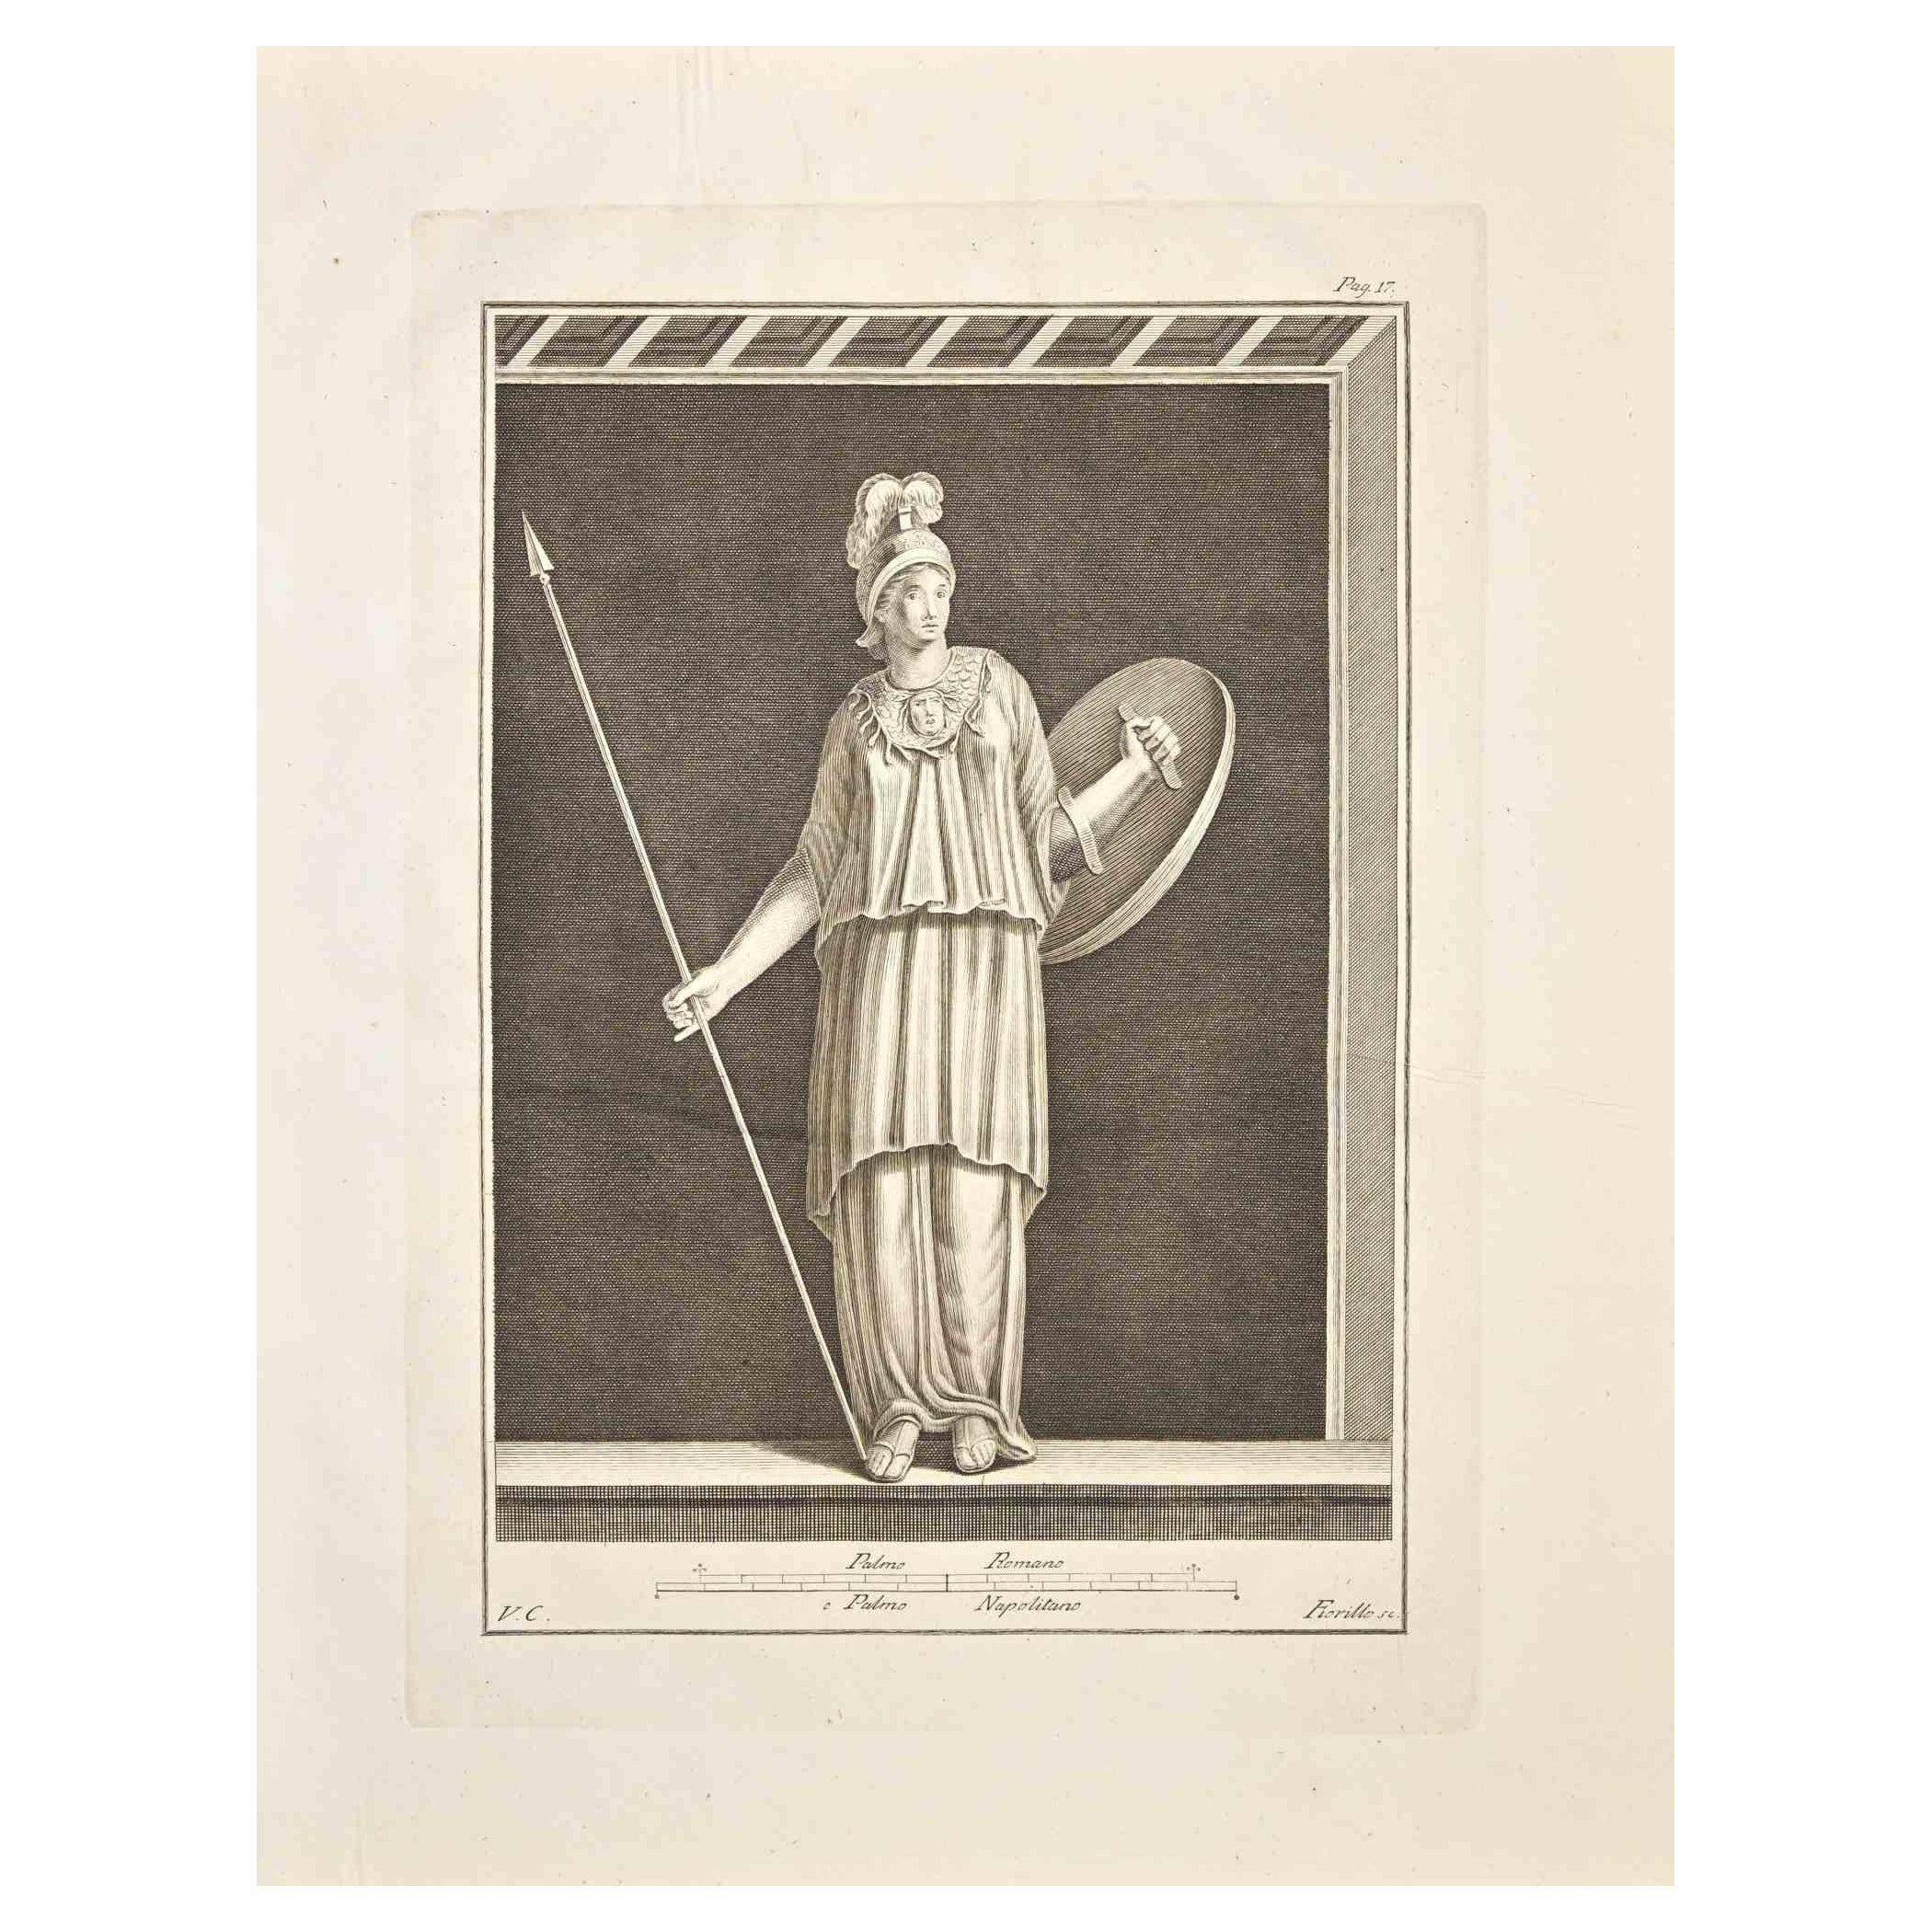 Vincenzo Campana Figurative Print - Ancient Roman Fresco Herculaneum - Etching V. Campana - 18th Century